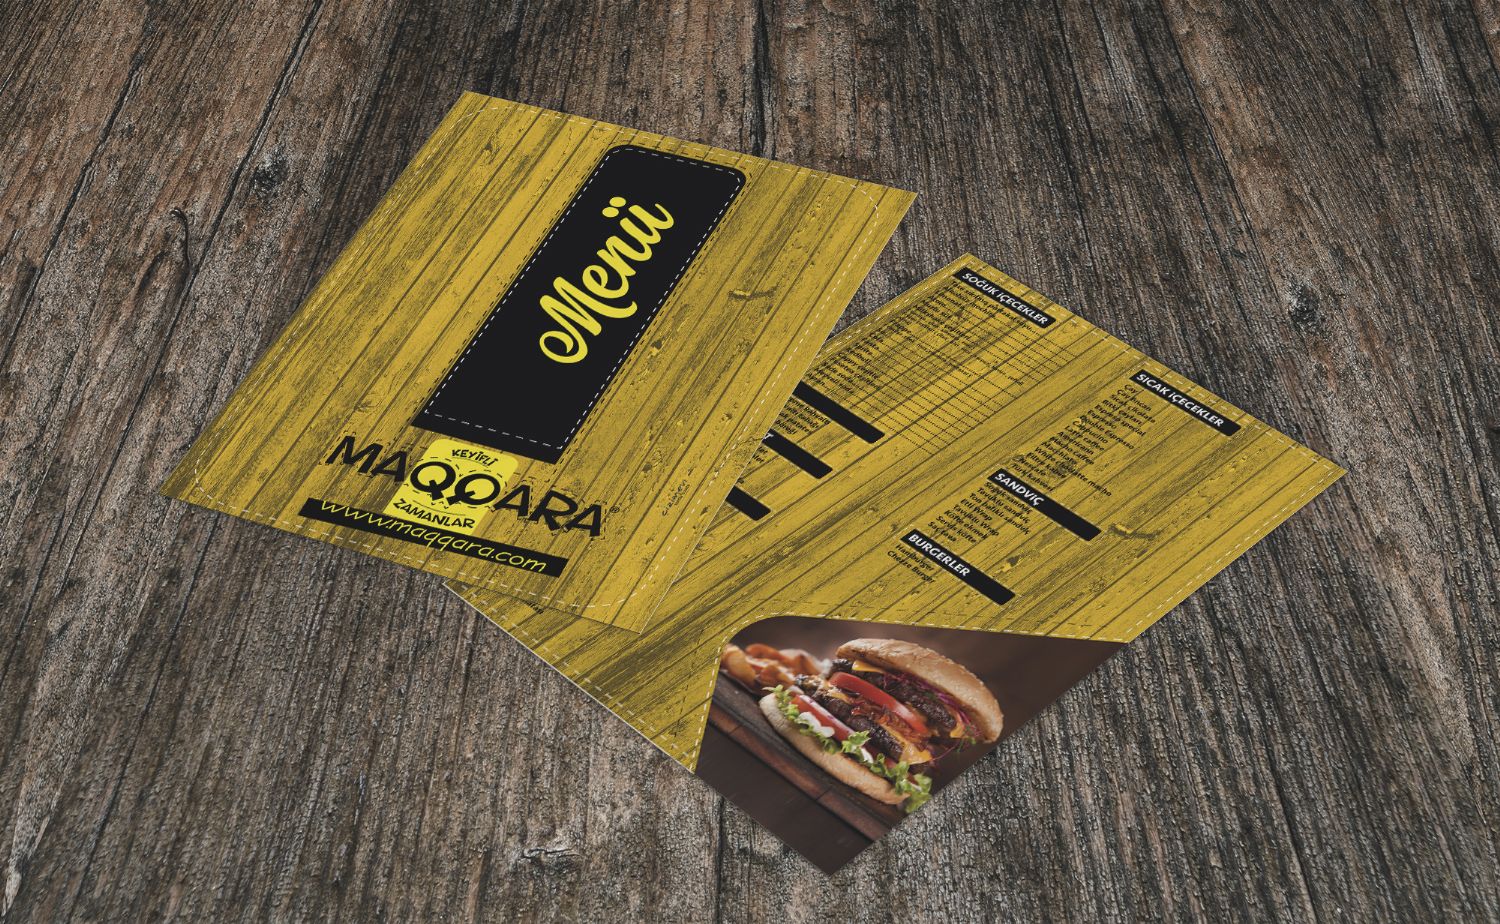 Maqqara Kafe Logo ve Menü Tasarımı 